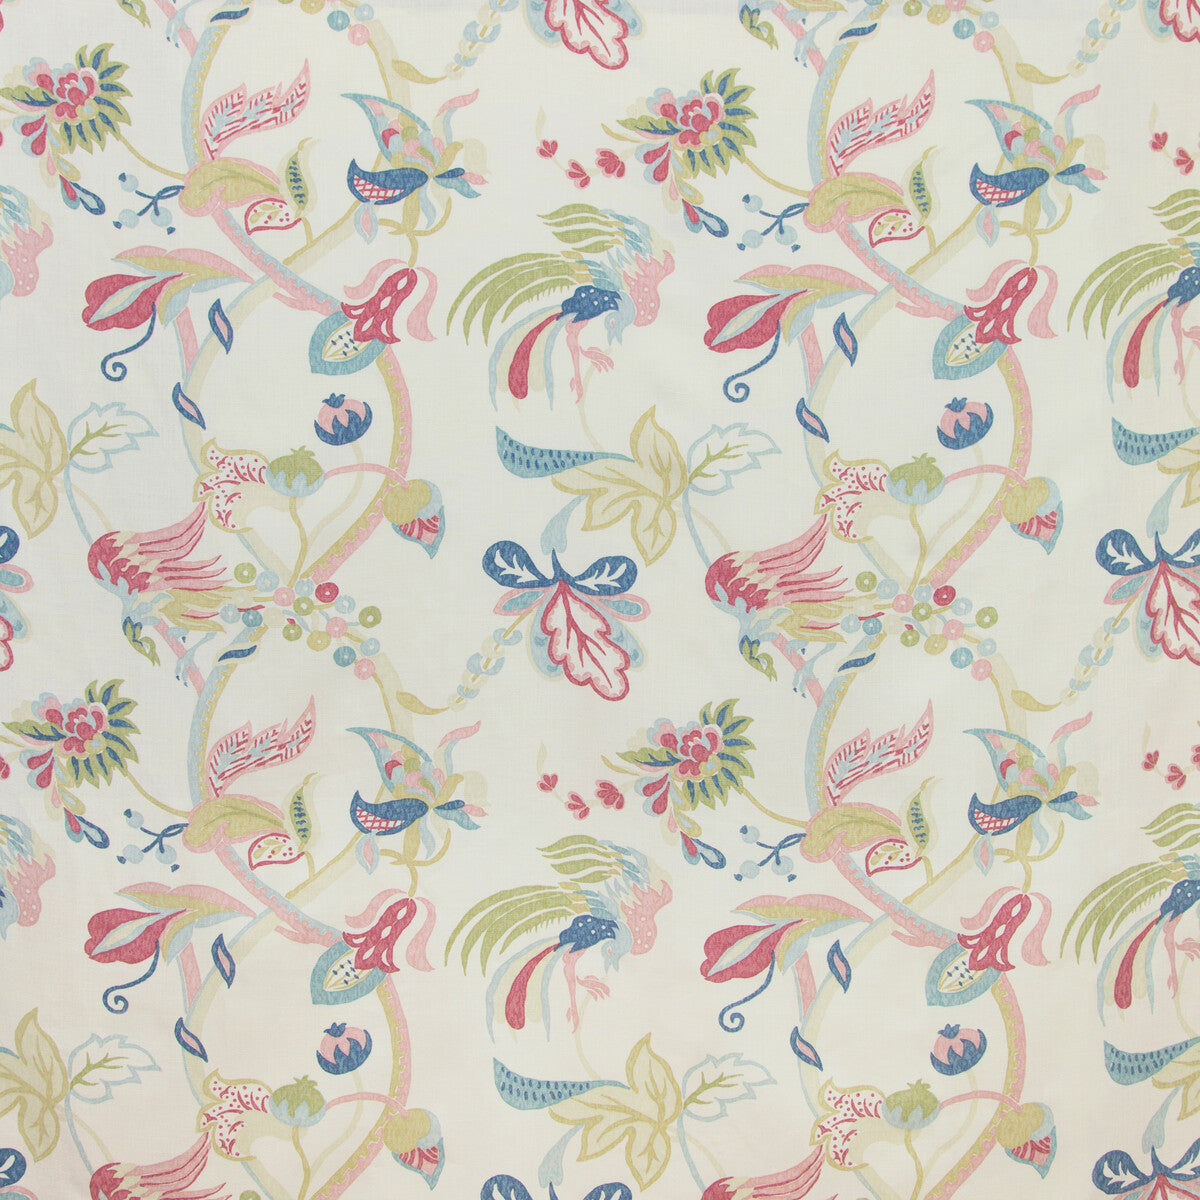 Gorda fabric in petal/capri color - pattern 2017162.175.0 - by Lee Jofa in the Westport collection